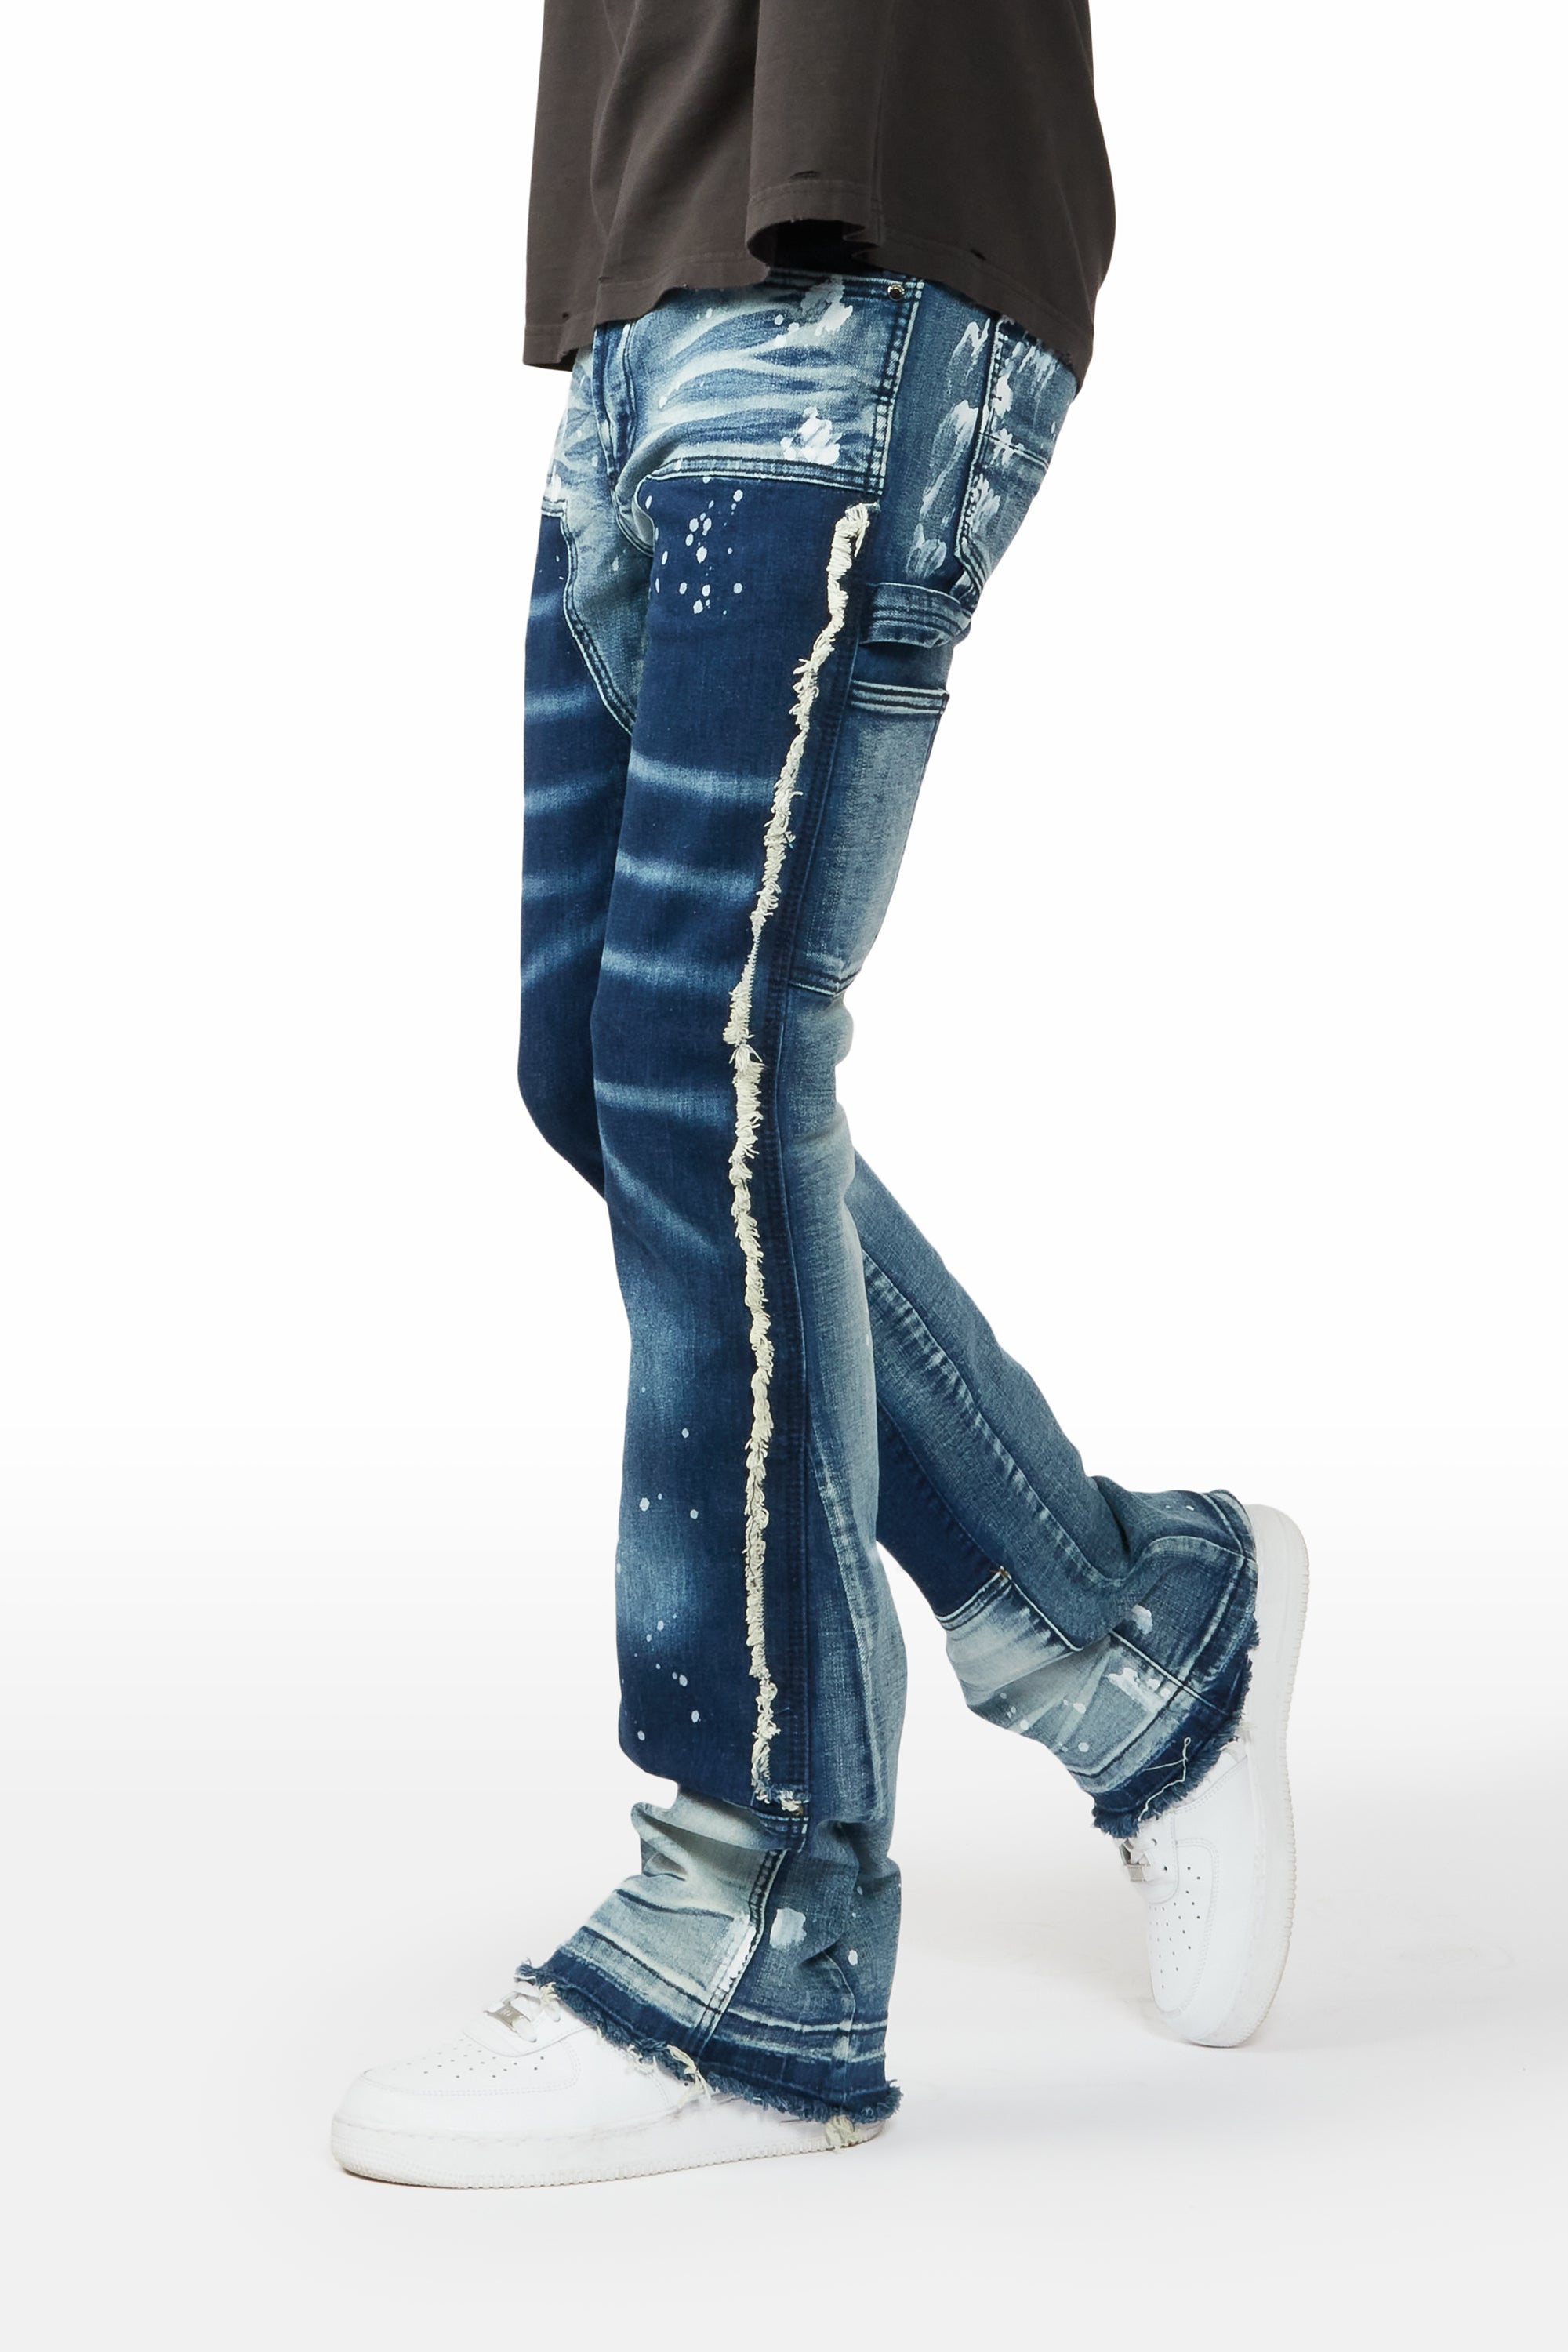 Rockstar Original Jeans Mens 38x34 Blue Denim Pants Ultra Slim Natural  Selection